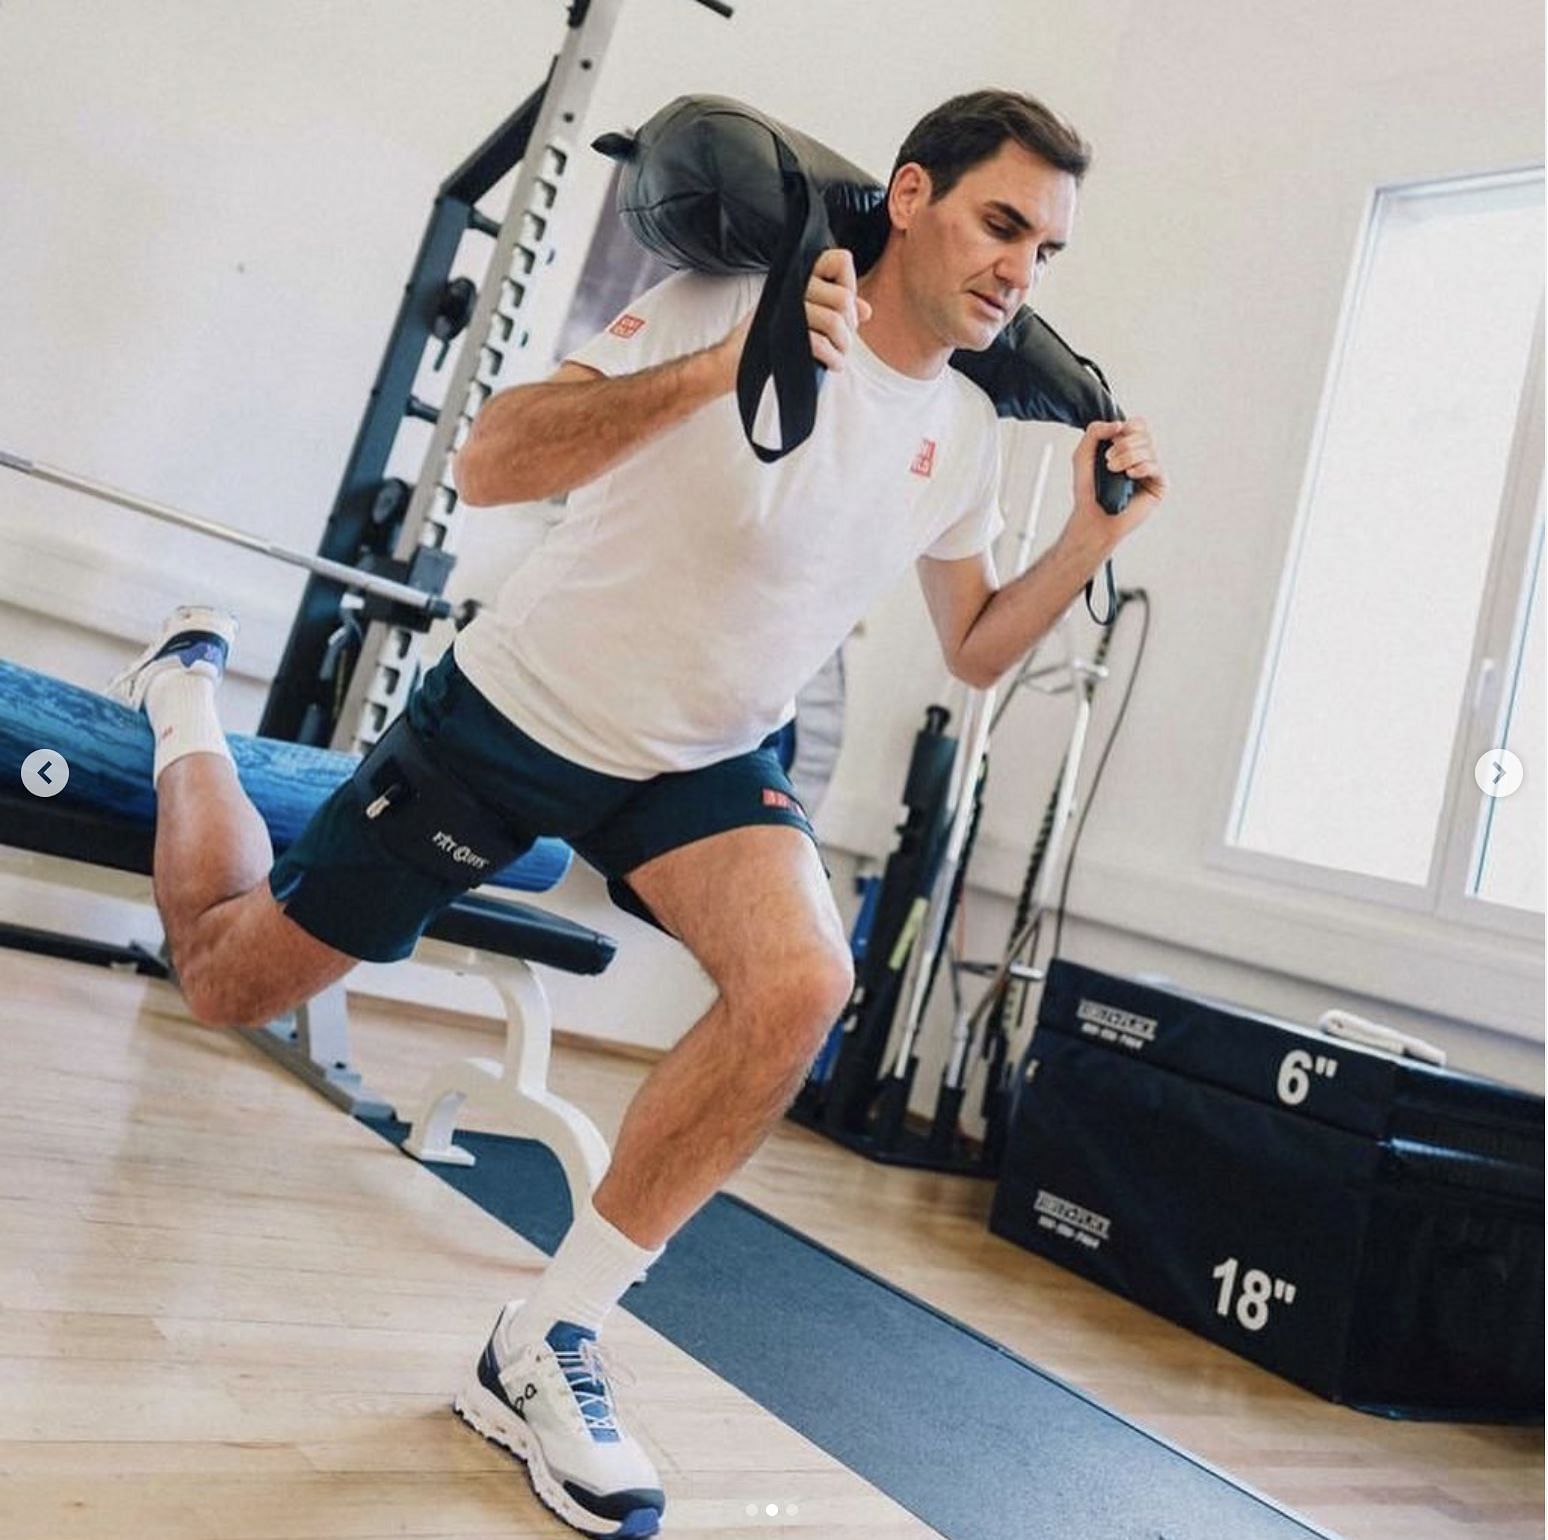 Roger Federer is hard at training at a gym